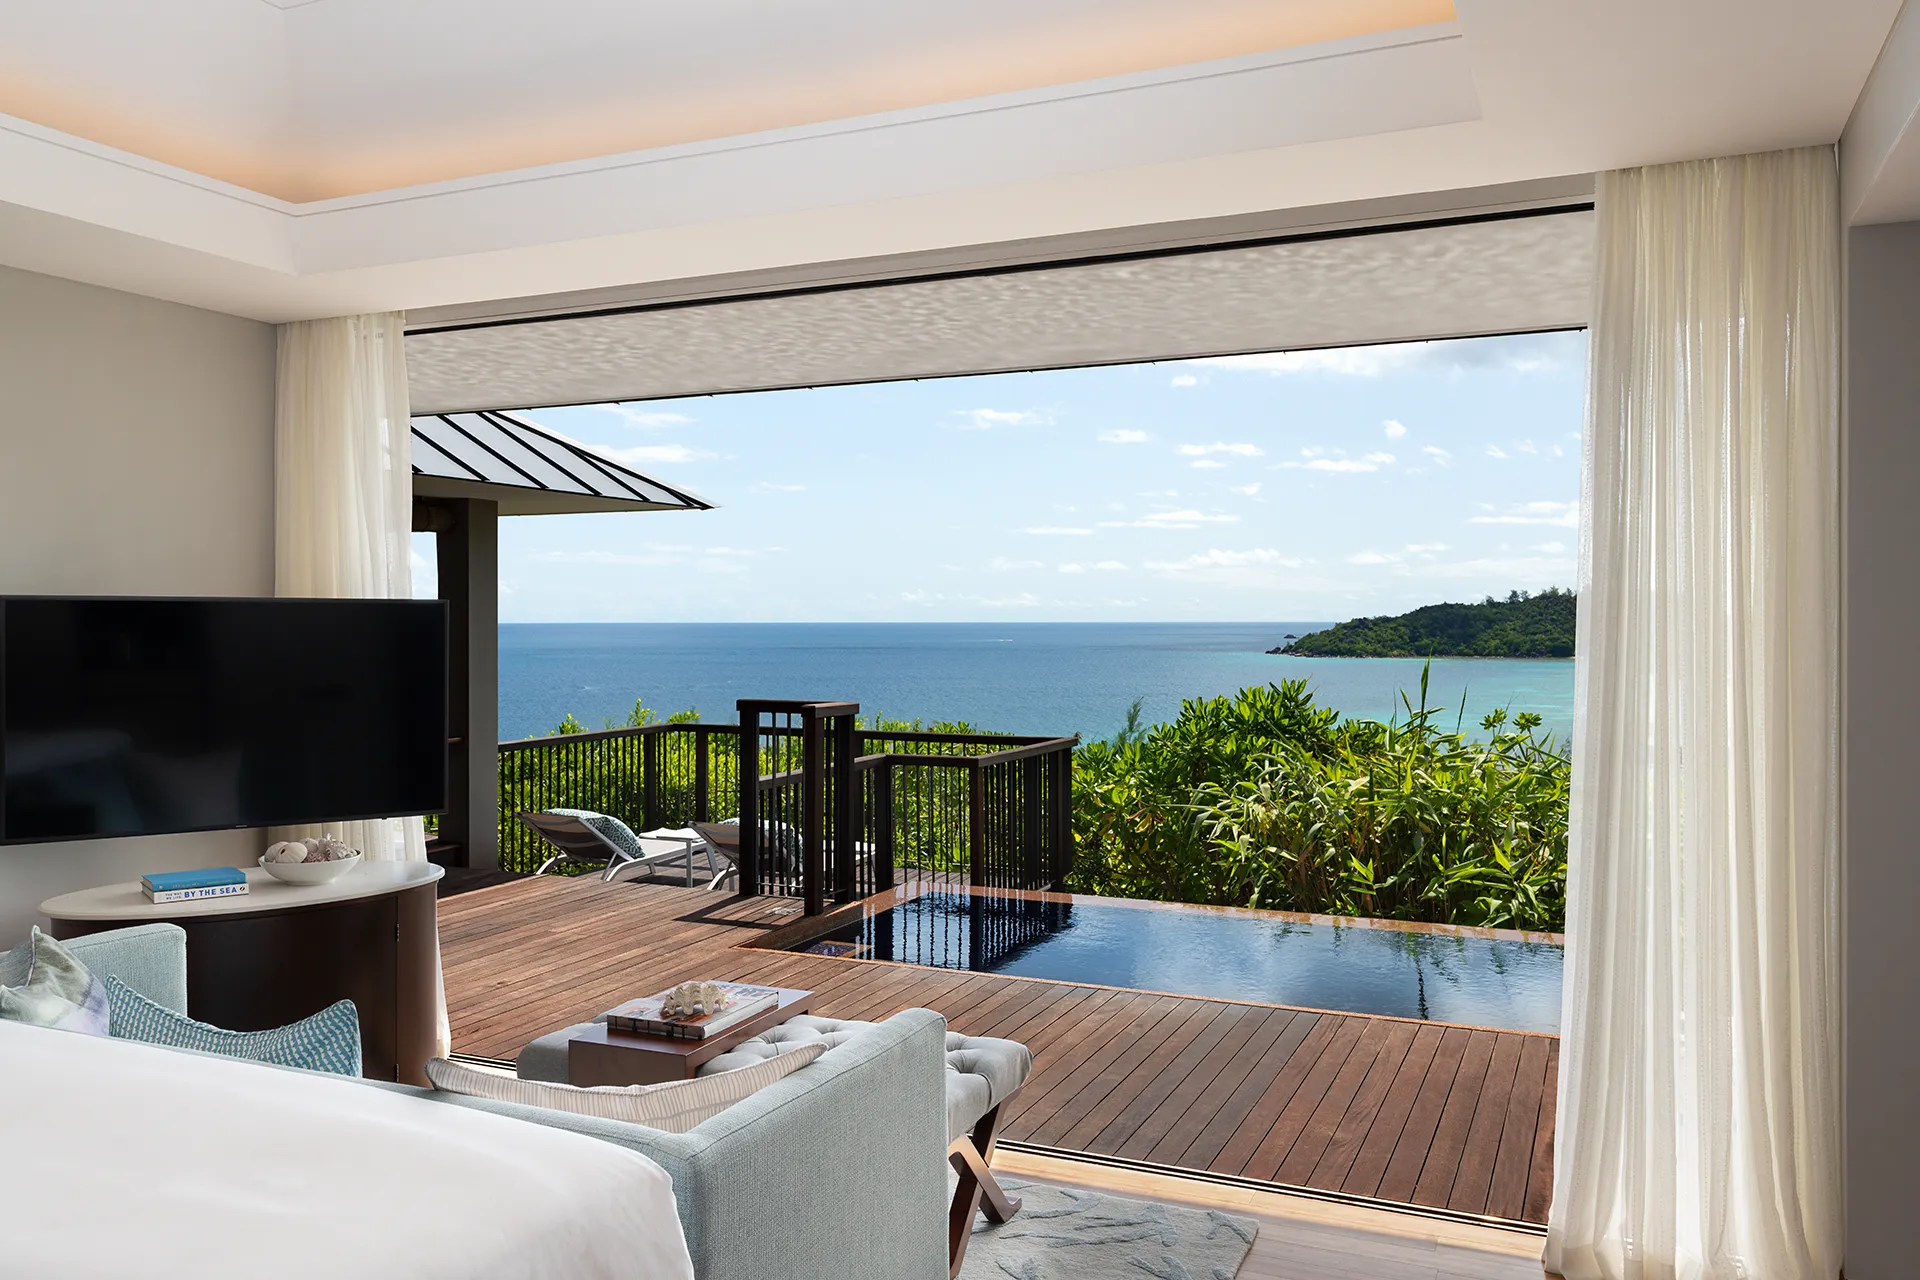 Meerblick aus einer luxuriösen Suite